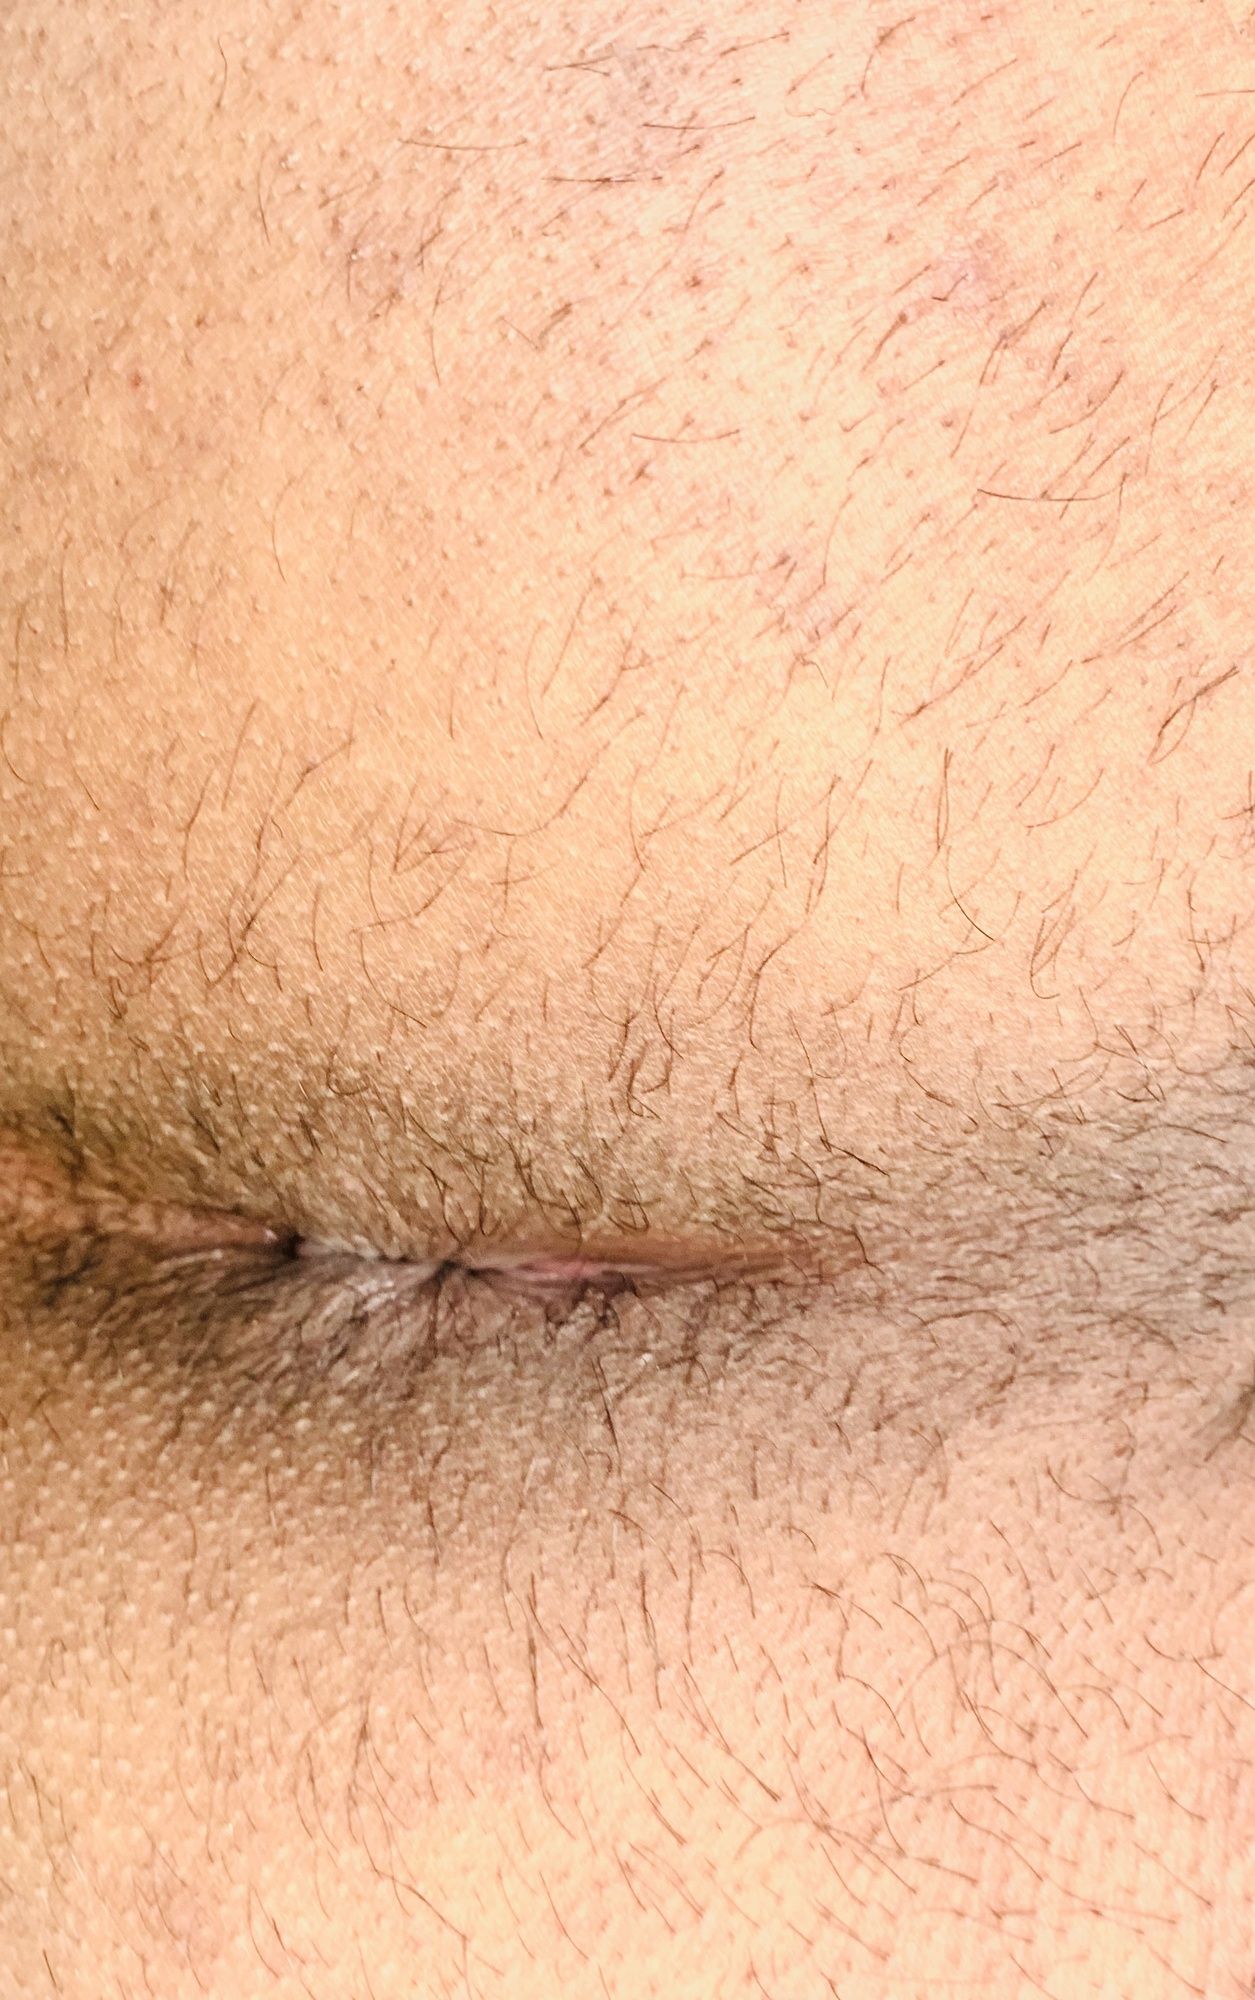 Close up Asshole #5